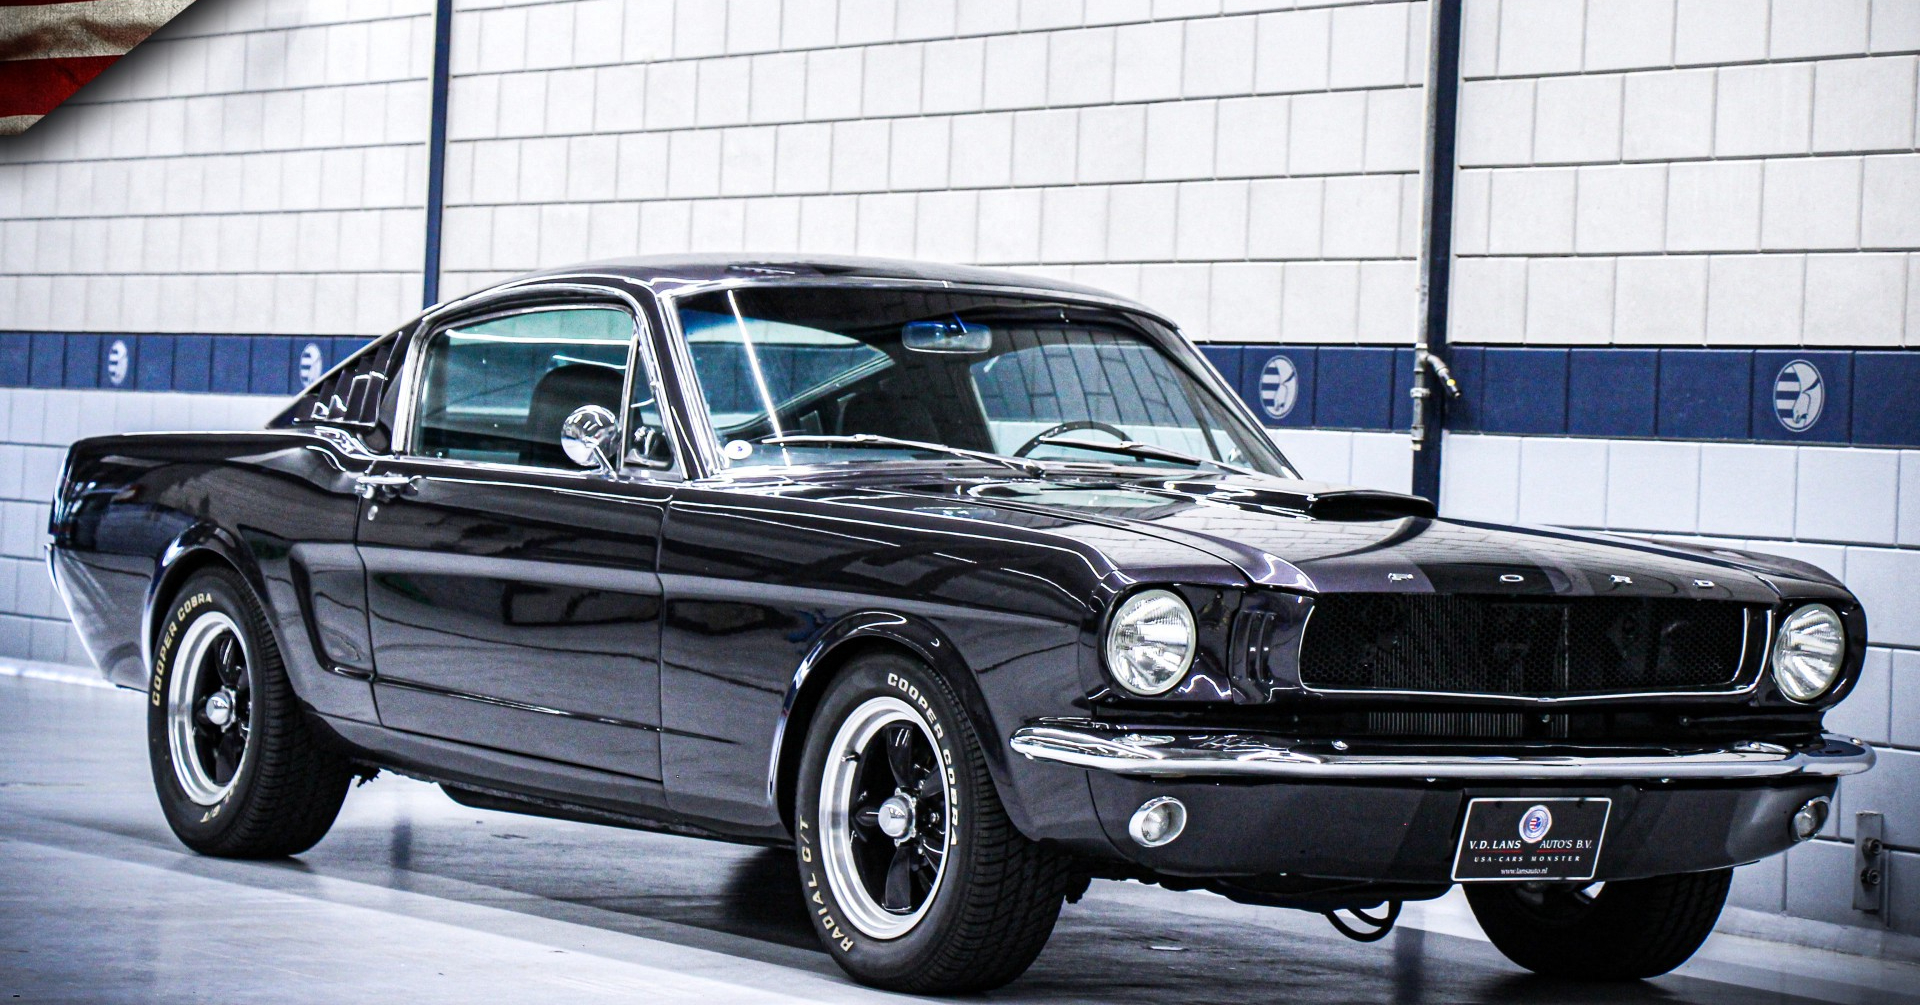 kom tot rust Diploma Bergbeklimmer Droom-occasion: overheerlijke Ford Mustang Fastback uit 1965